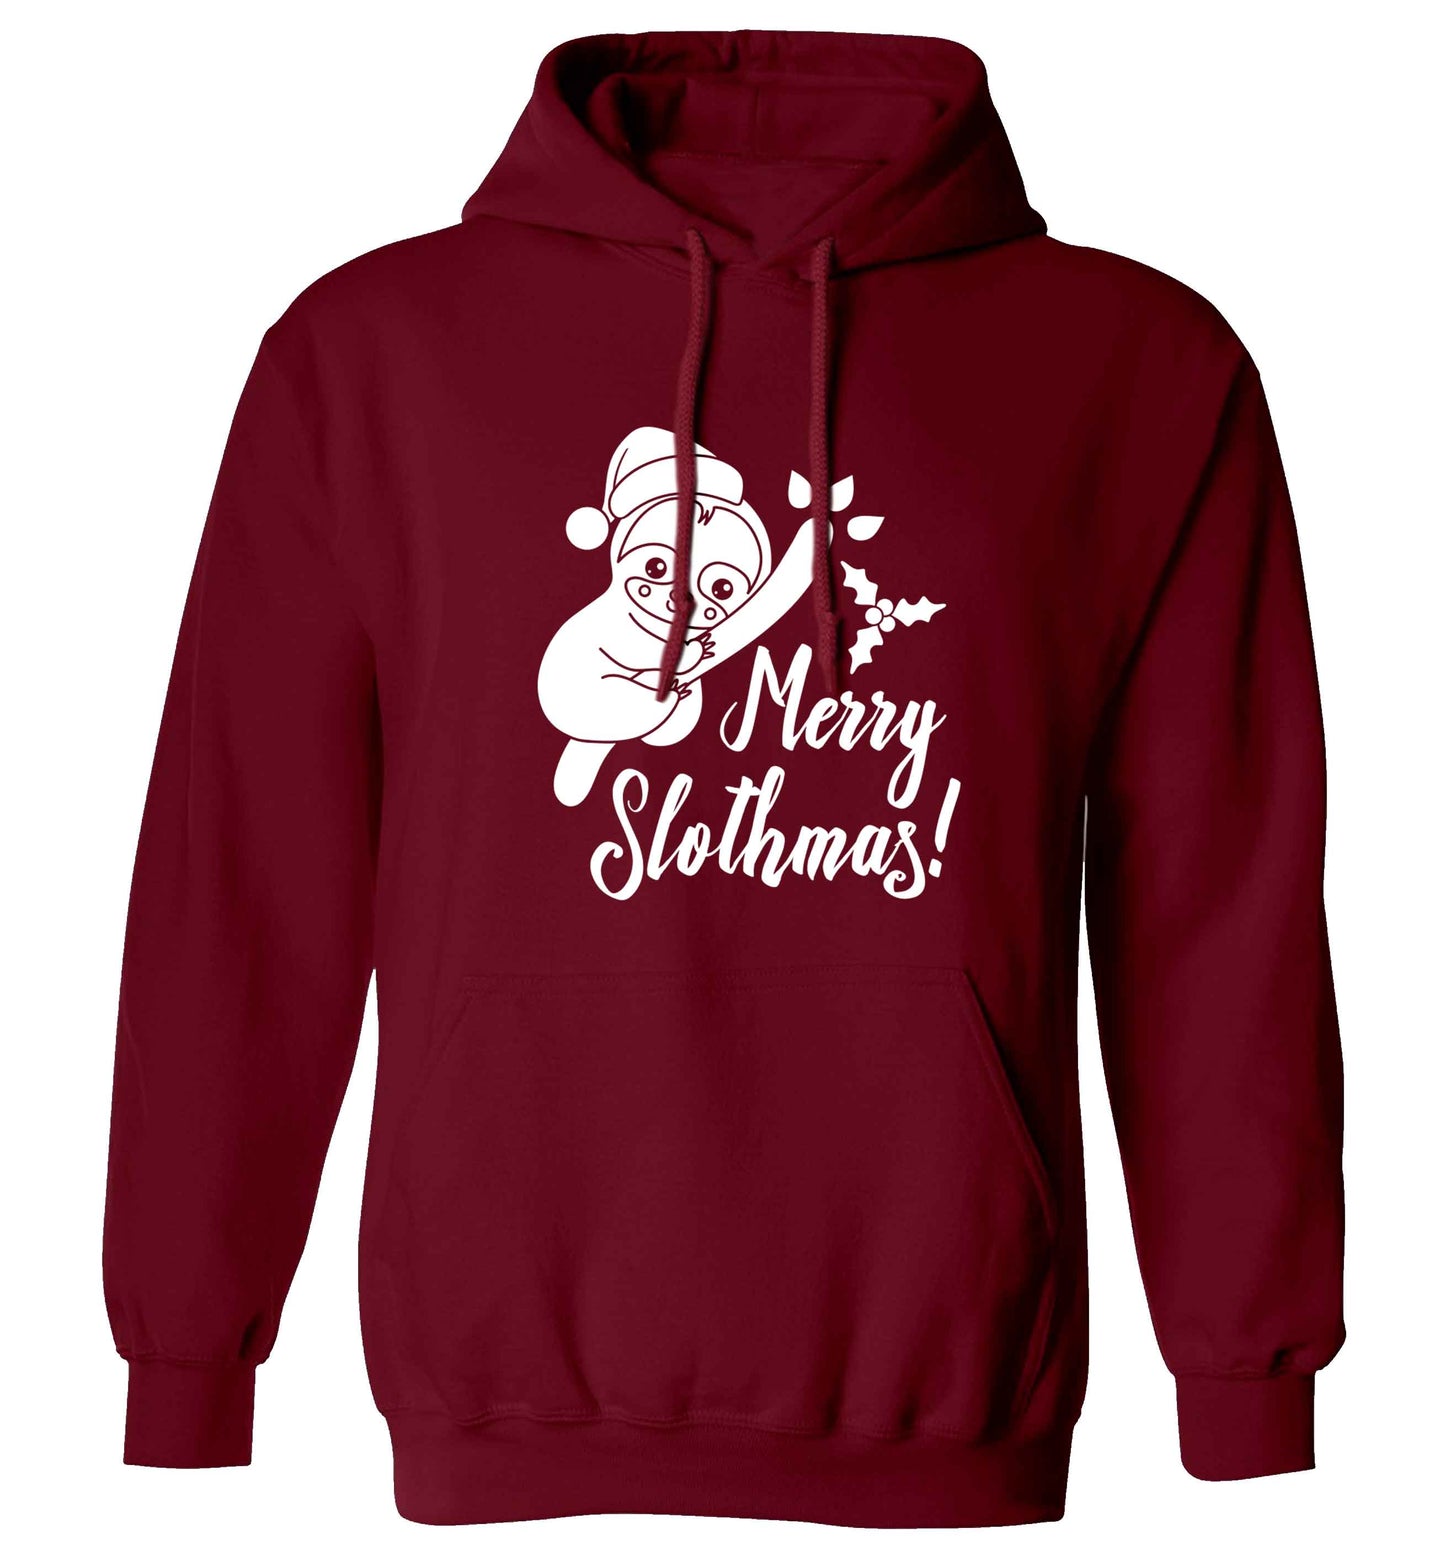 Merry Slothmas adults unisex maroon hoodie 2XL